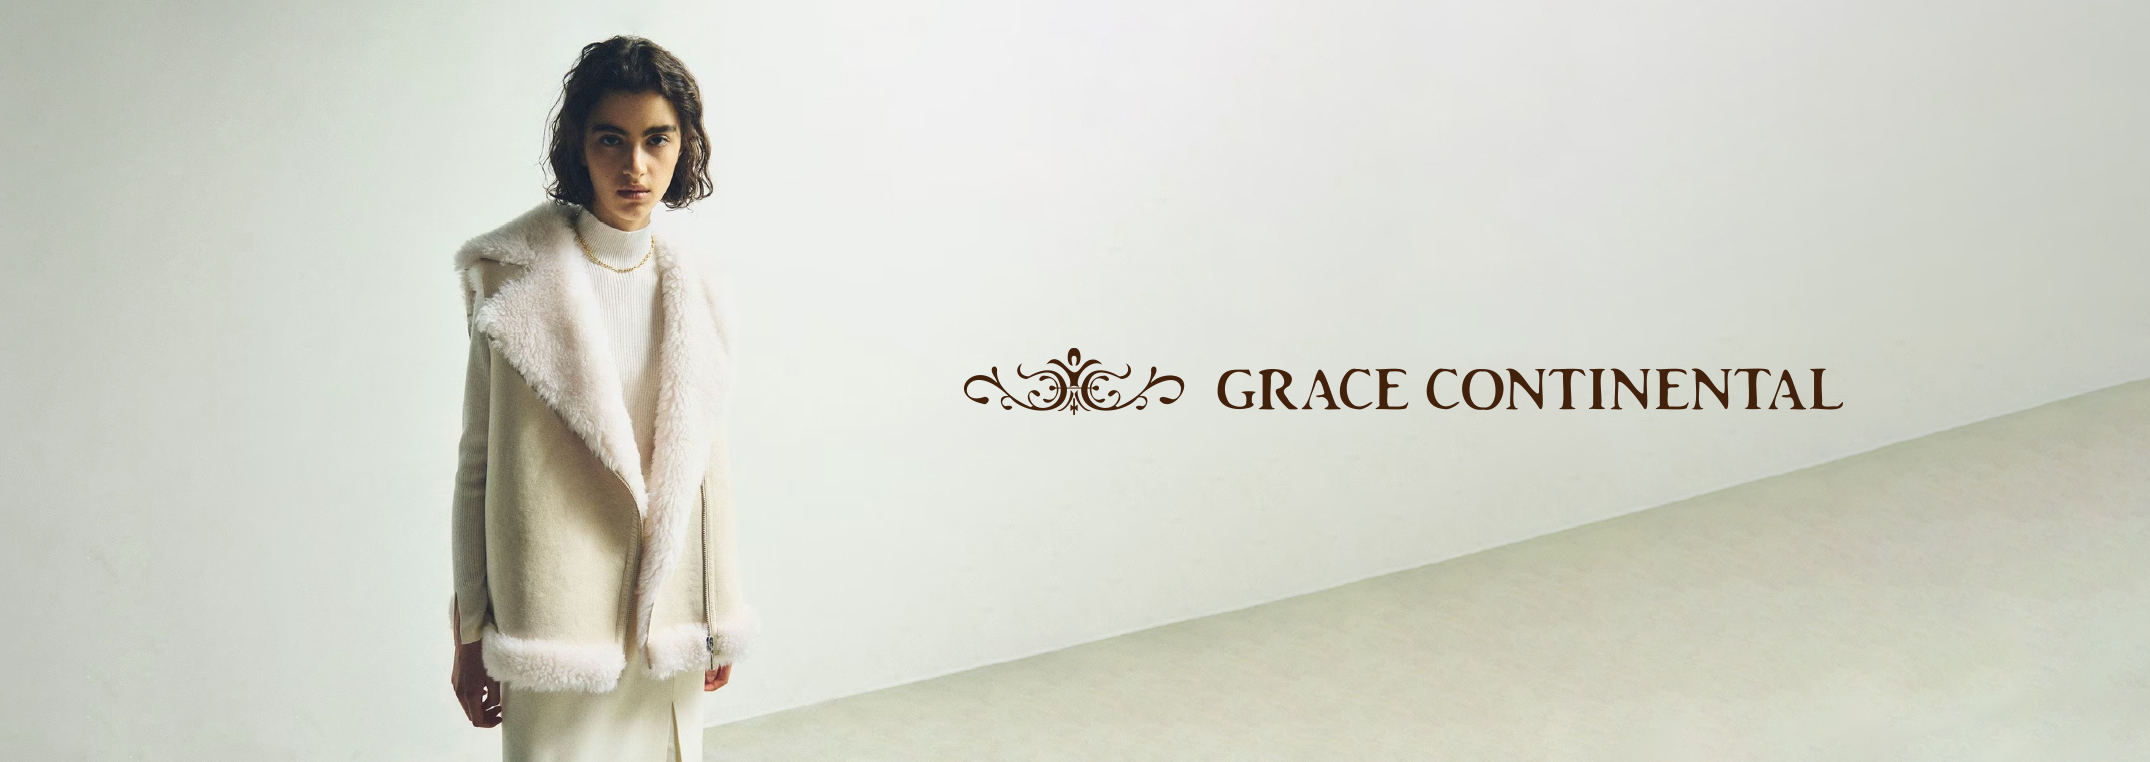 Grace Continental - belonging